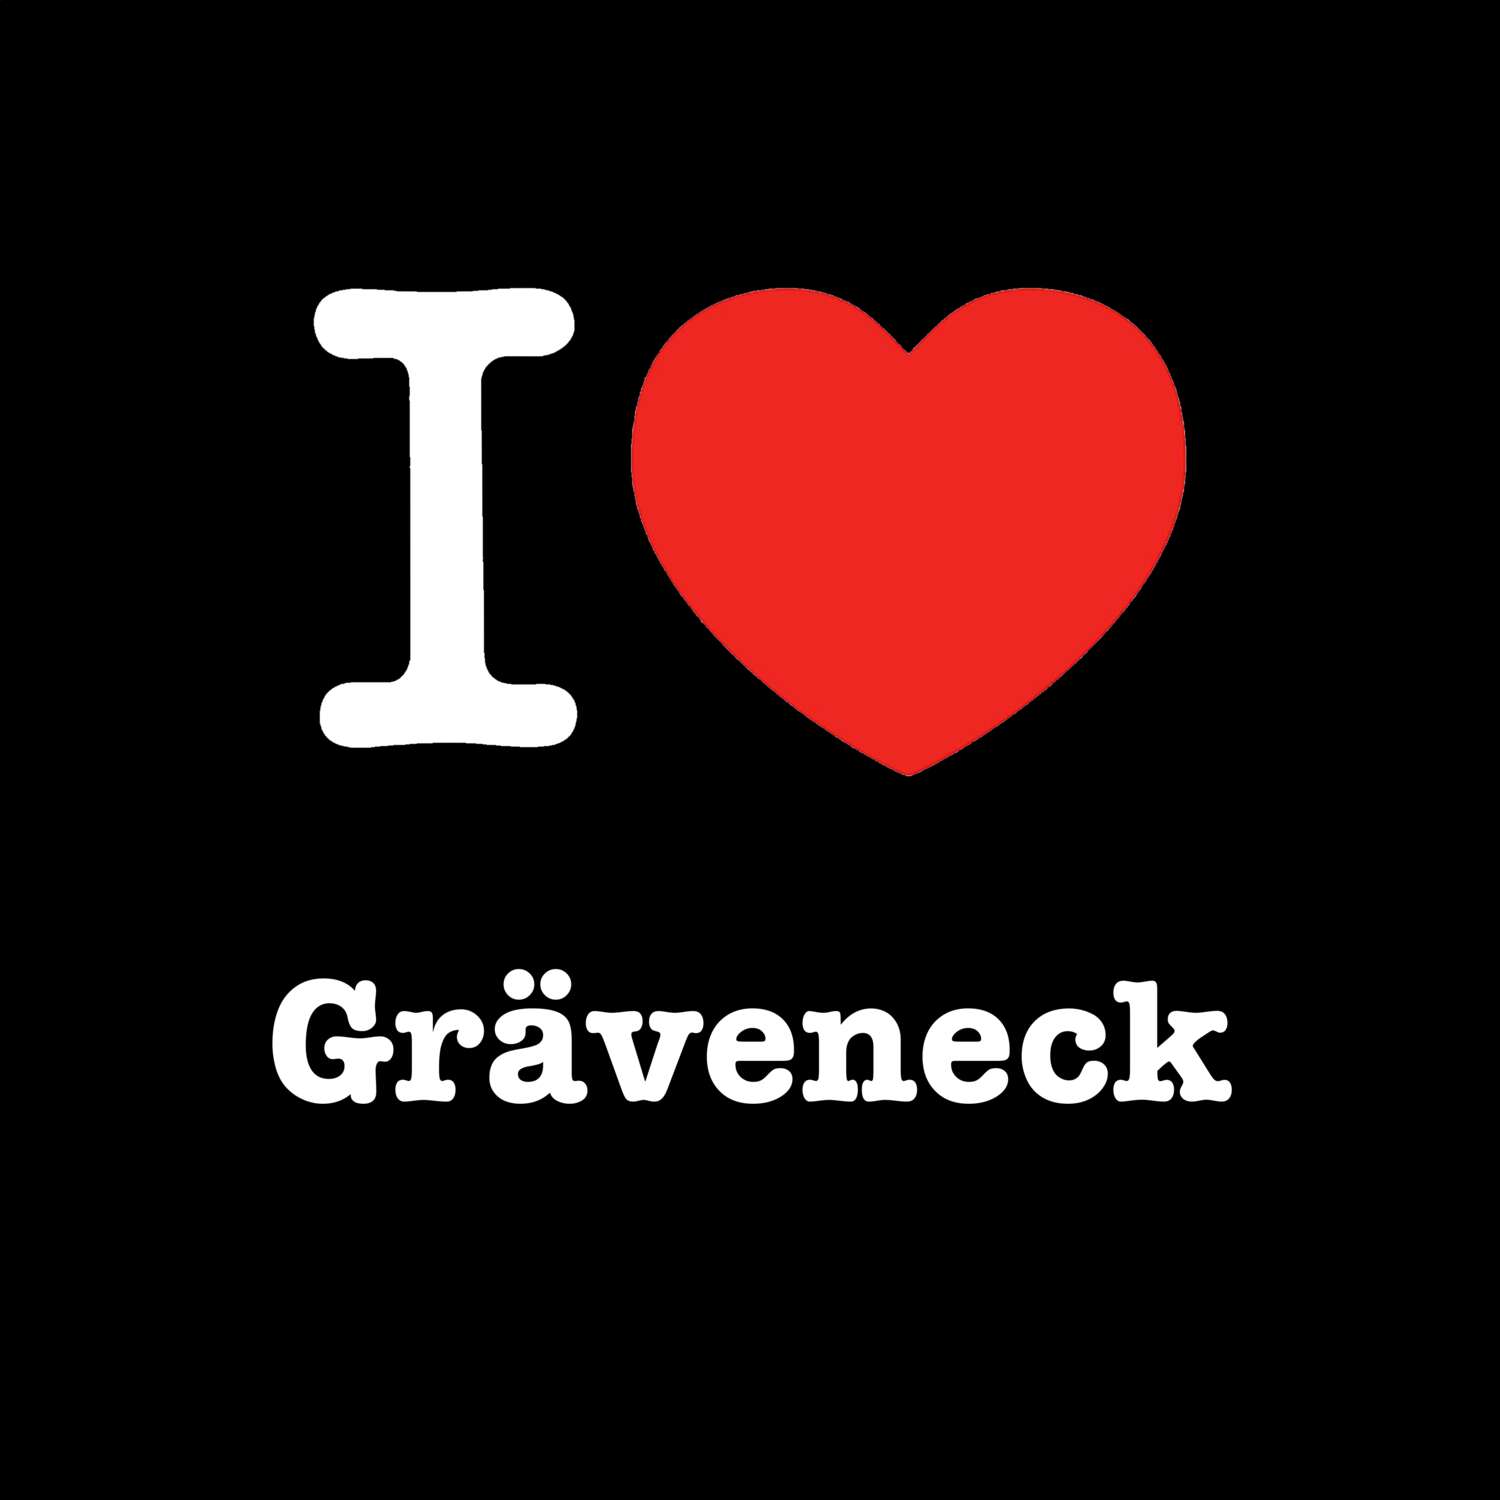 Gräveneck T-Shirt »I love«